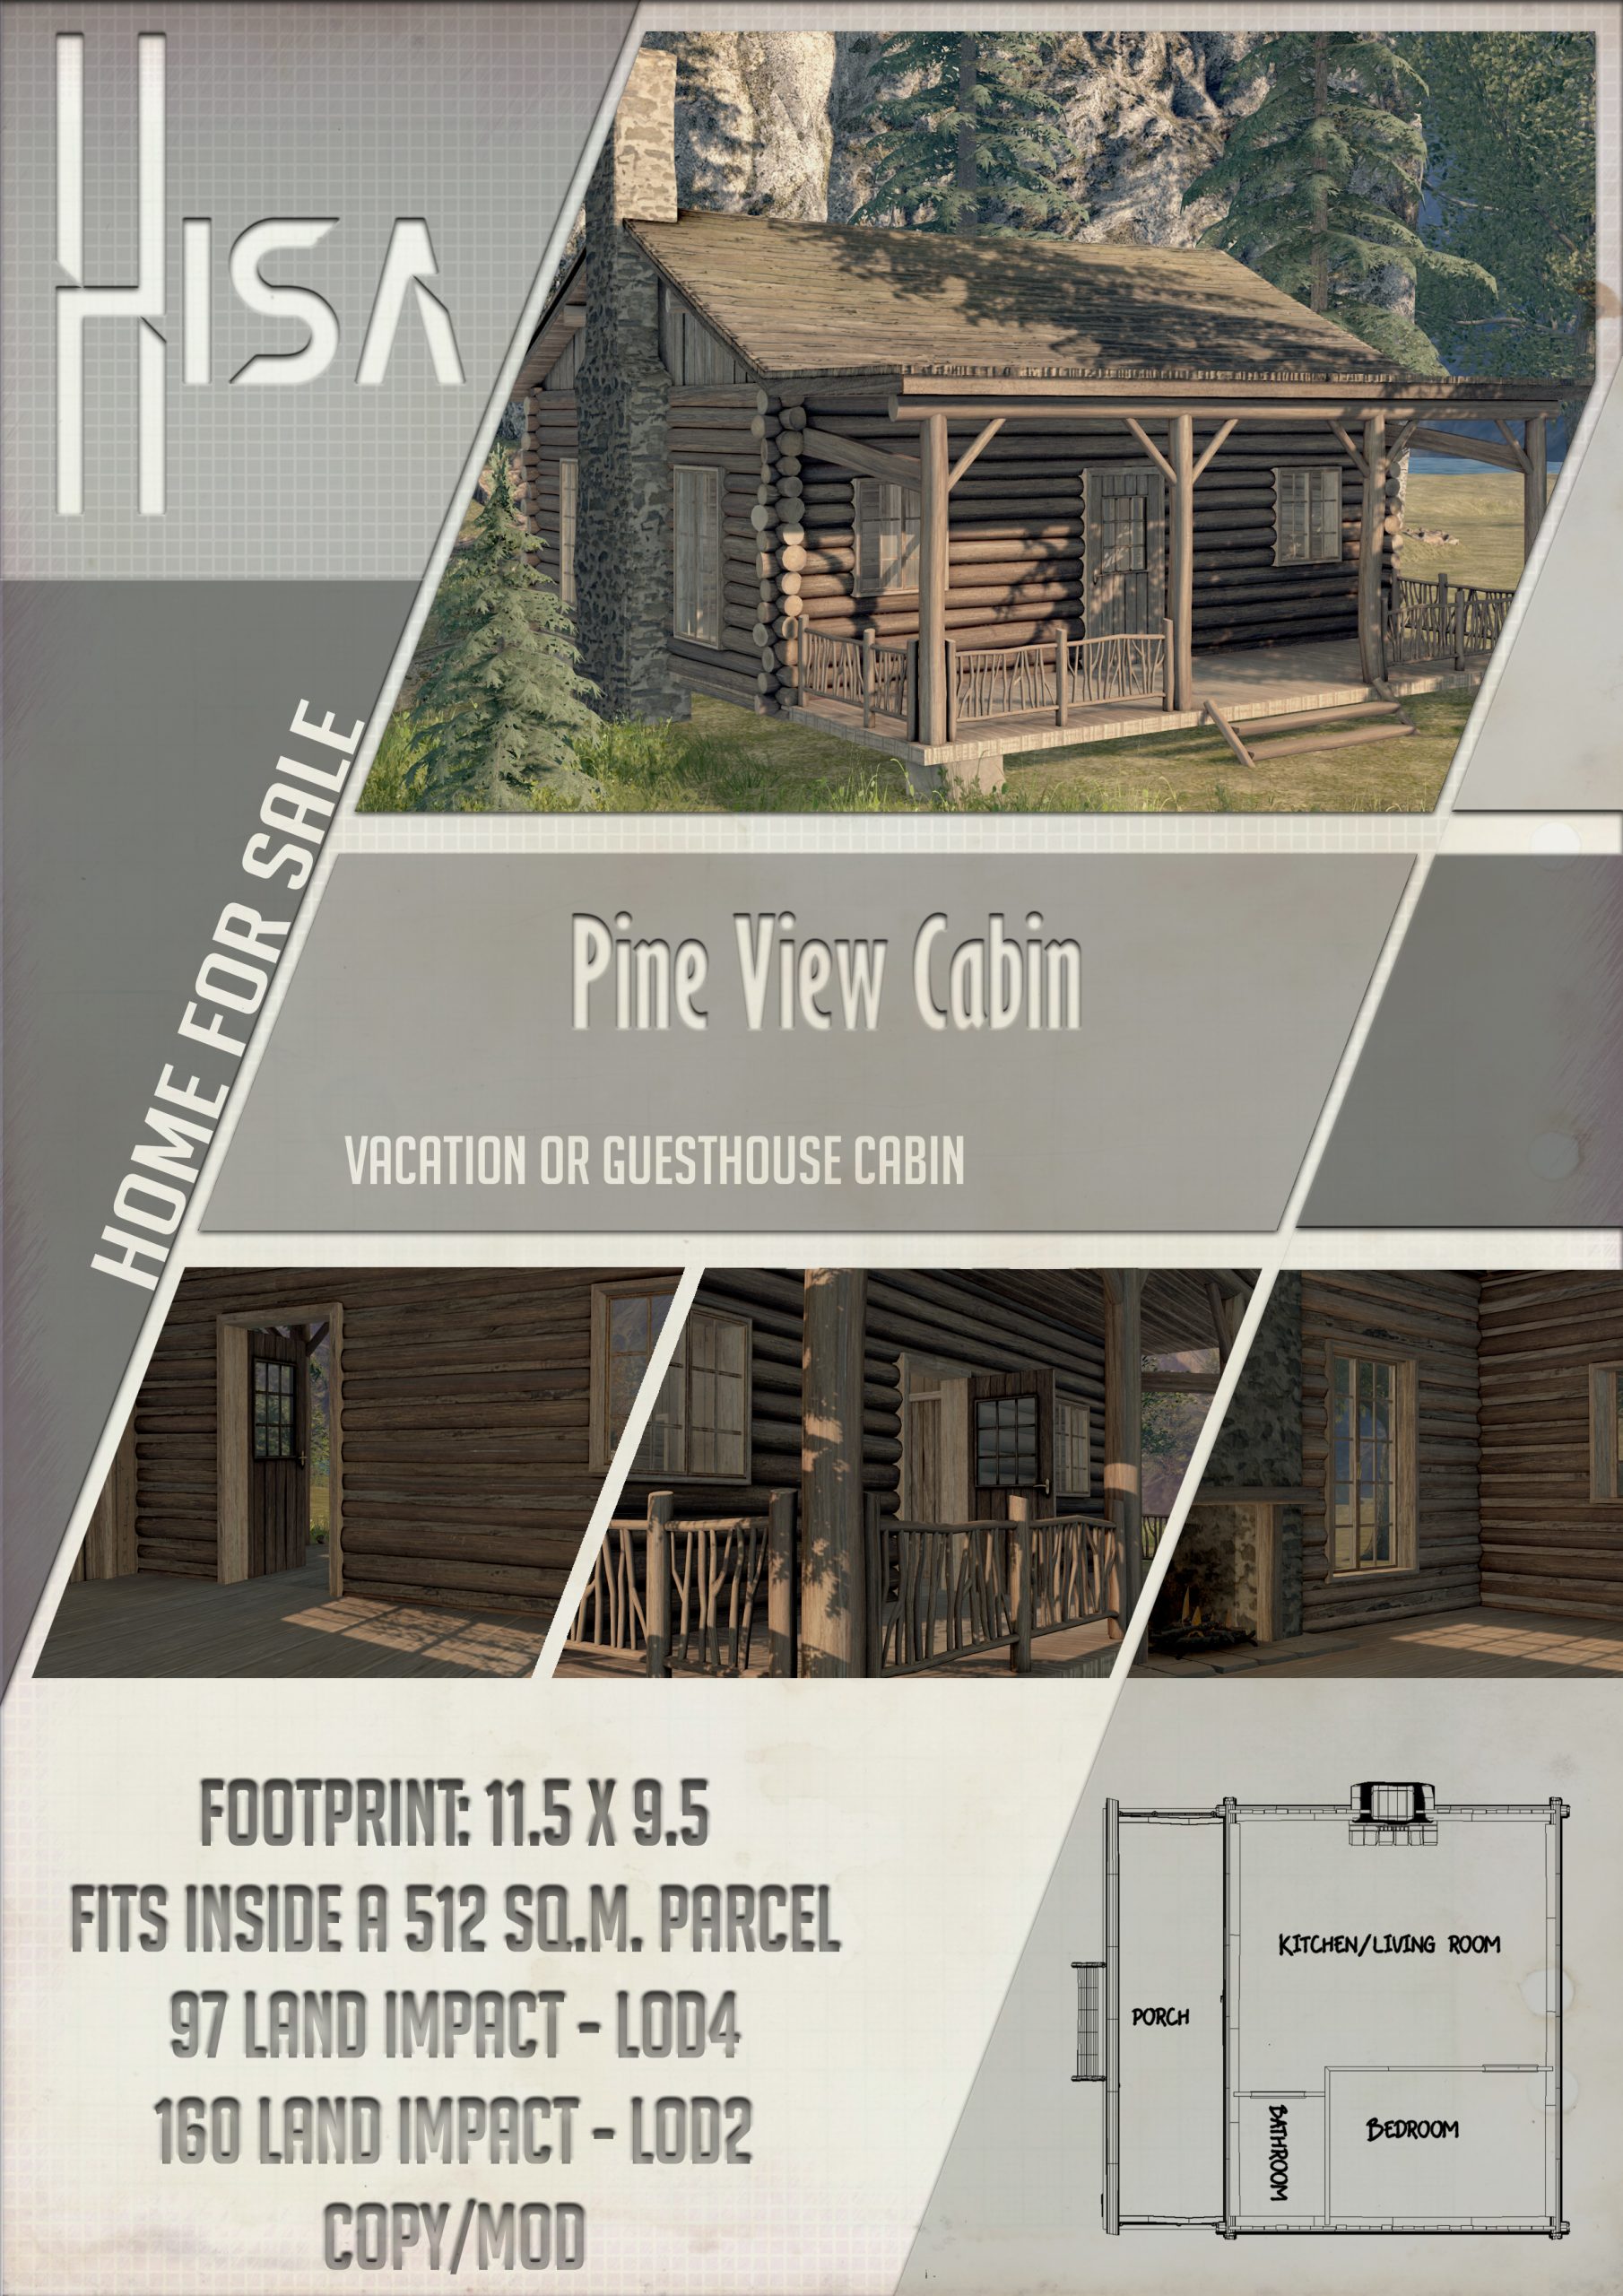 HISA – Pine View Cabin